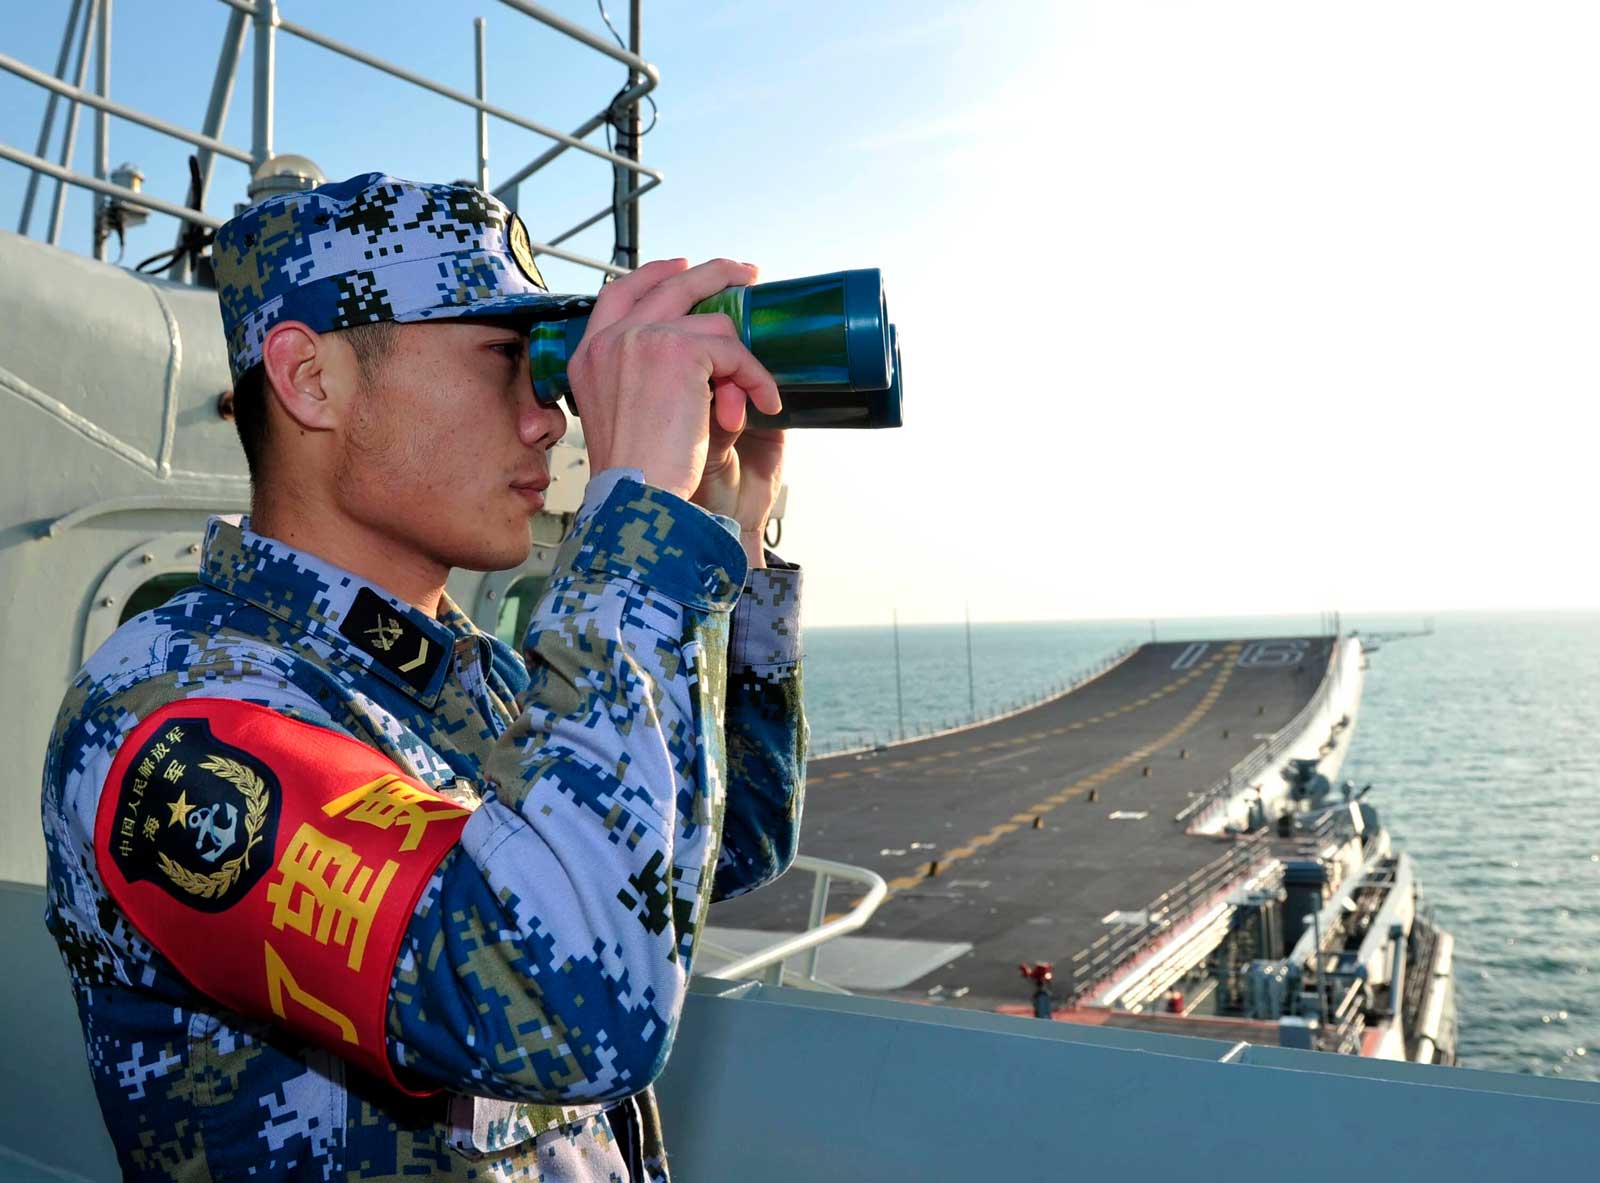 La estrategia de China para controlar el Mar de China Meridional: La defensa de lo indefendible